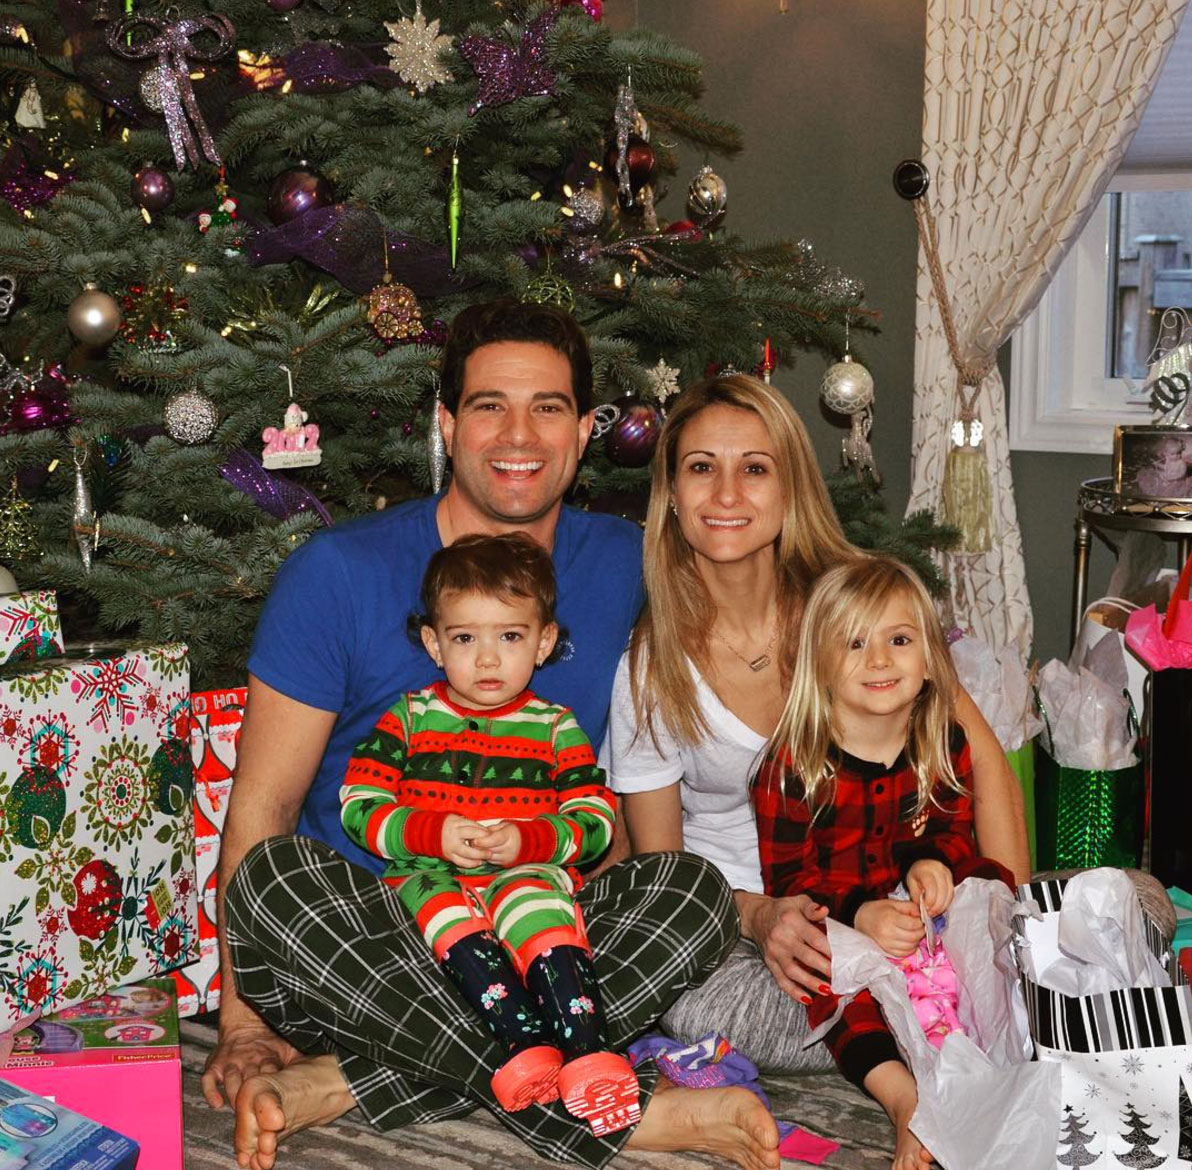 The McGillivray family on Christmas morning